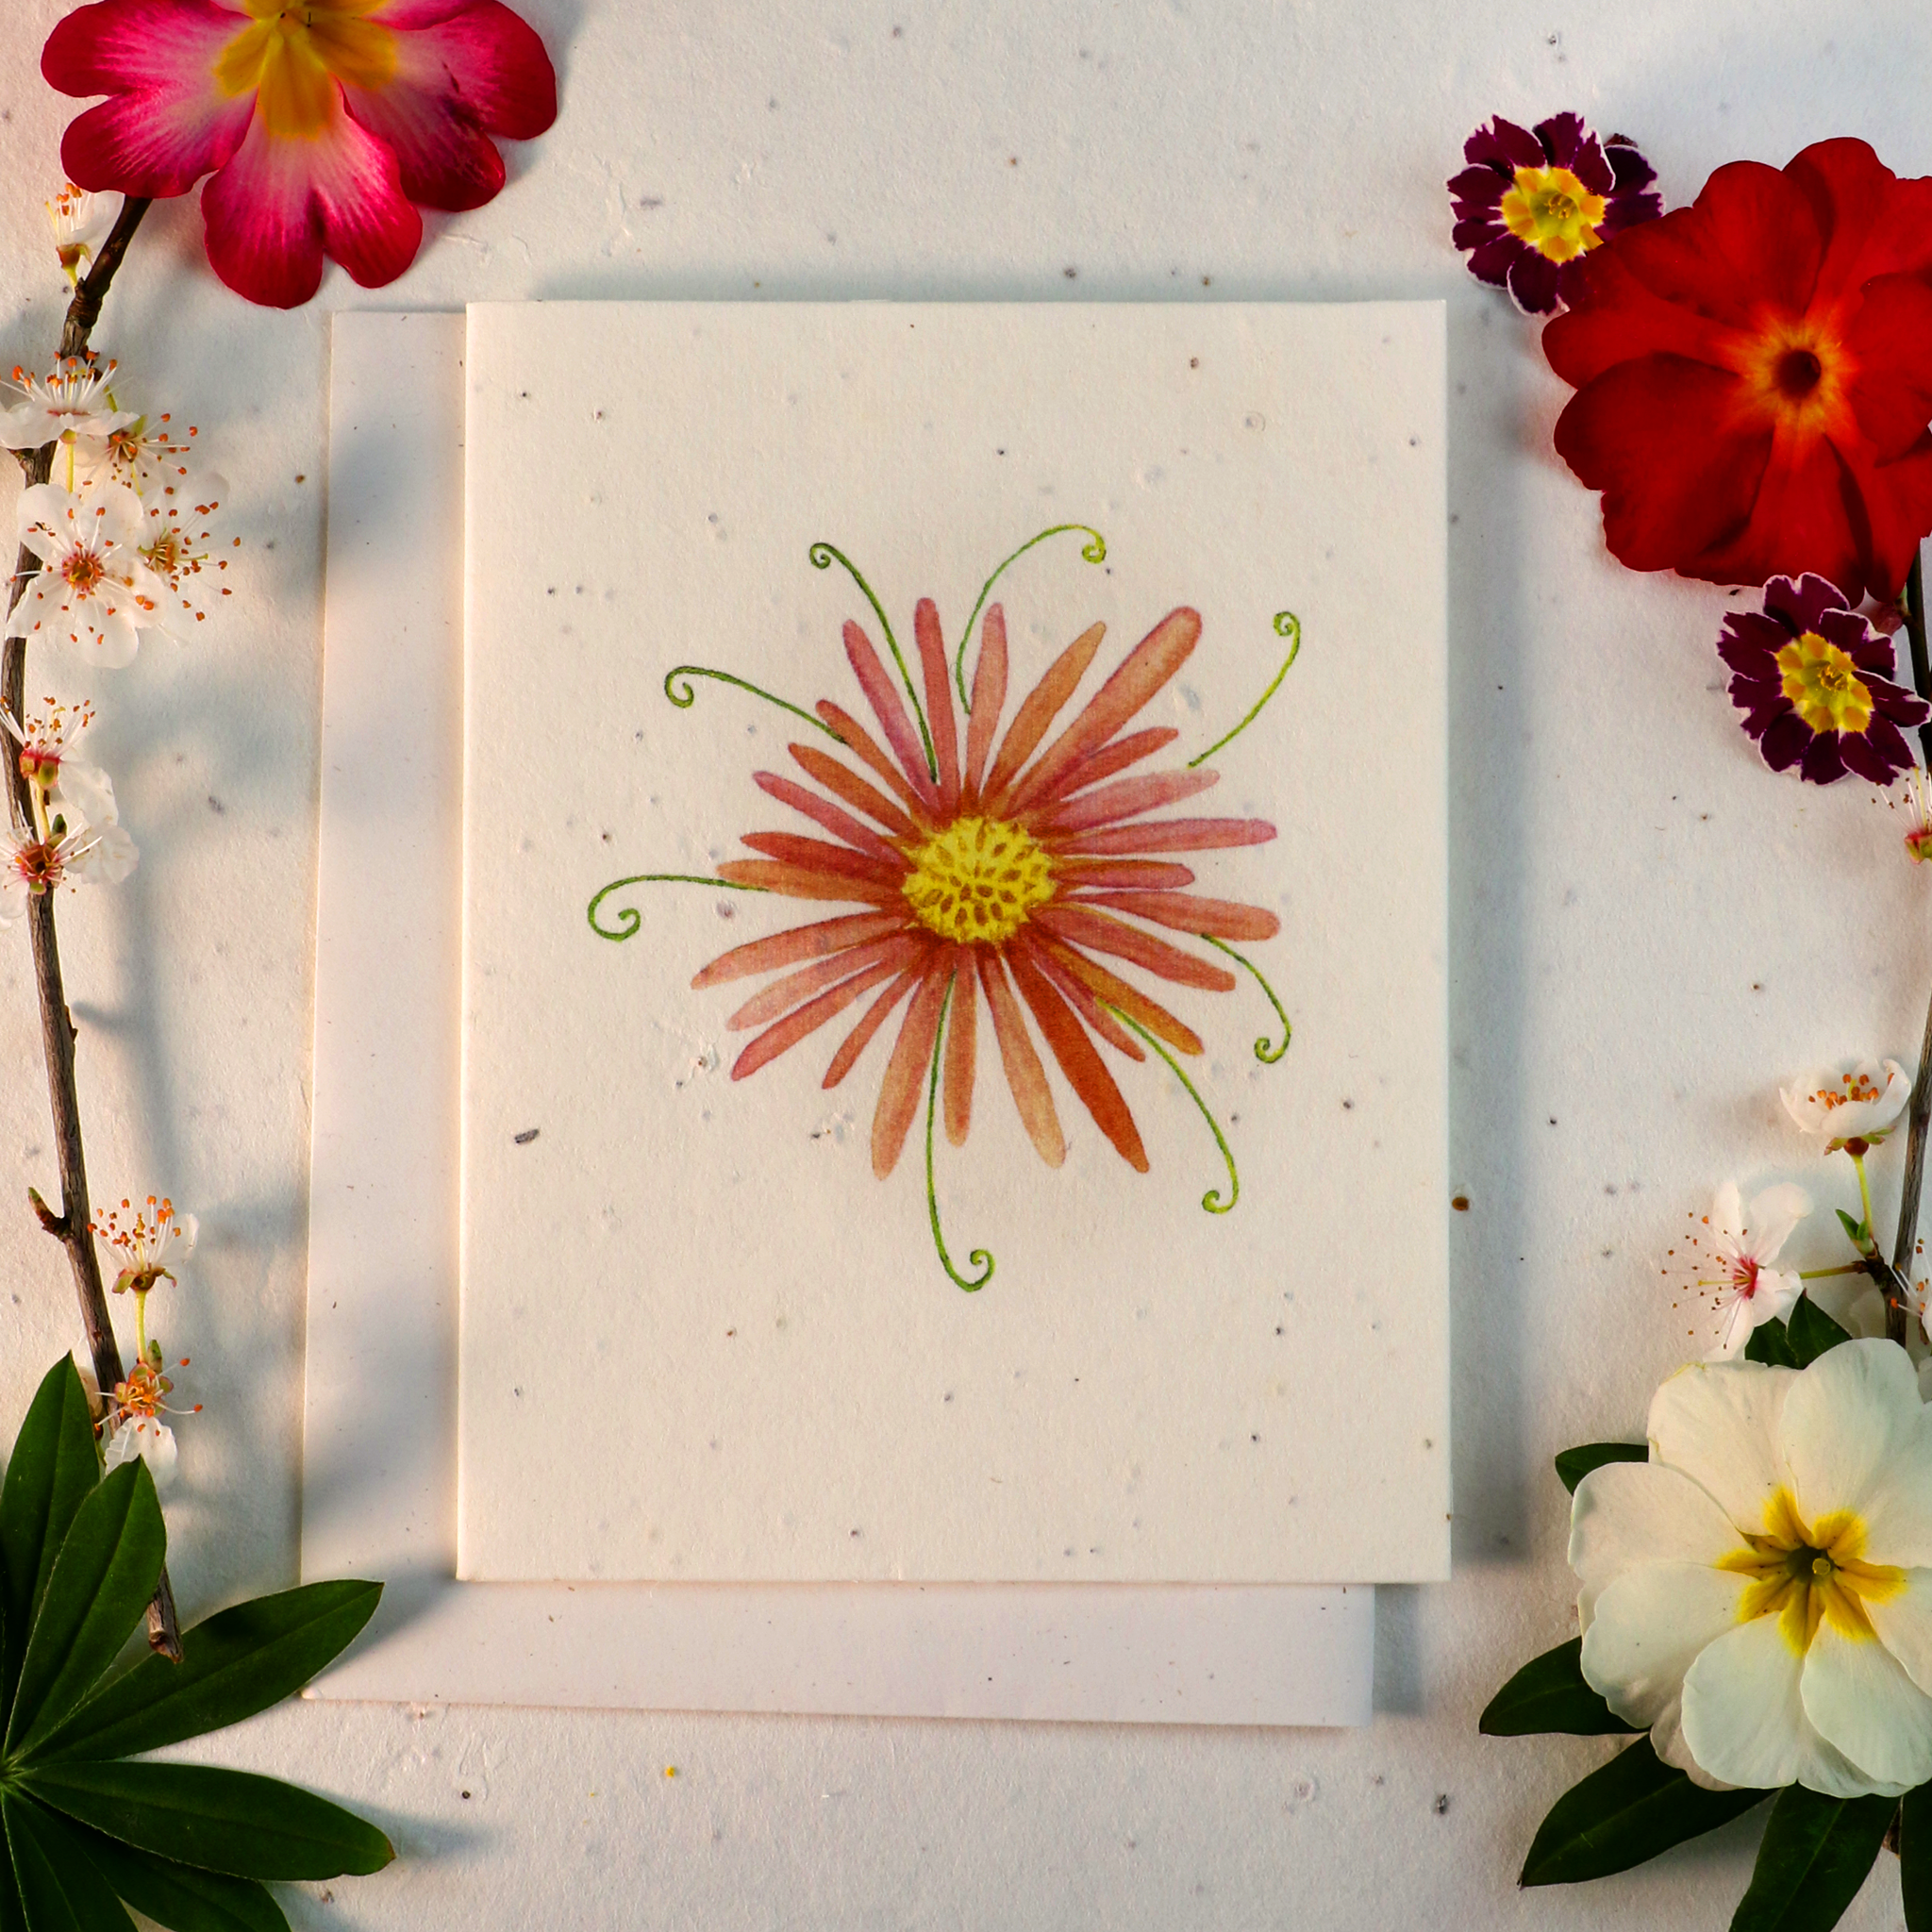 Gezaaide kaarten die uitgroeien tot bloemen (Whimsy Flower)